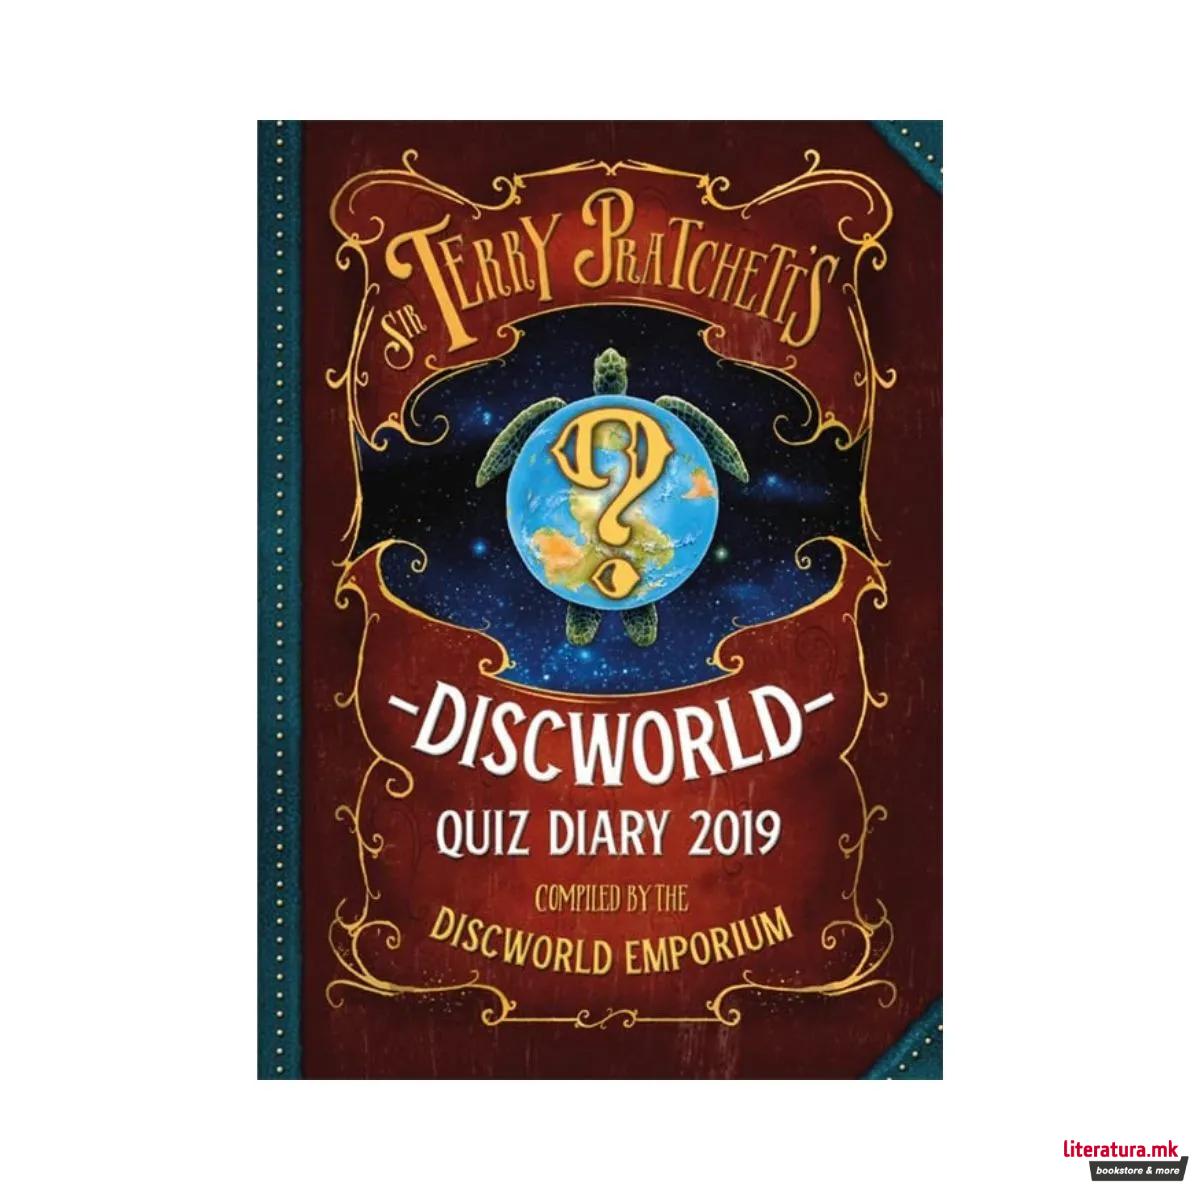 Terry Pratchett's Discworld Quiz Diary 2019 